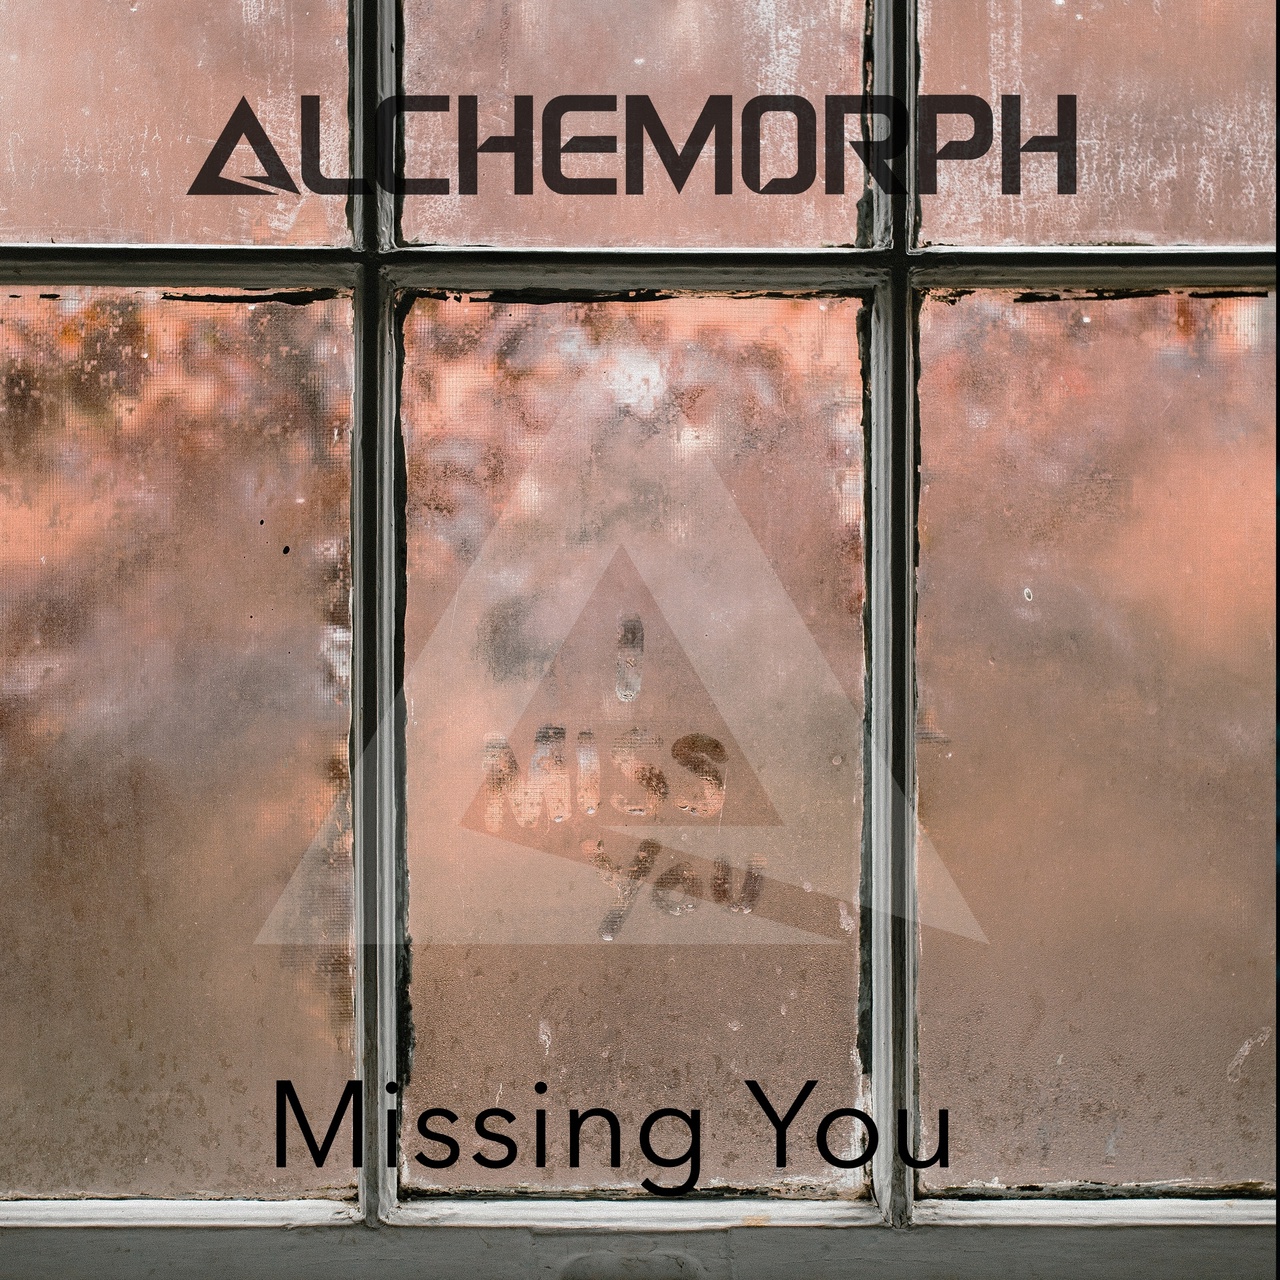 Alchemorph- Missing You